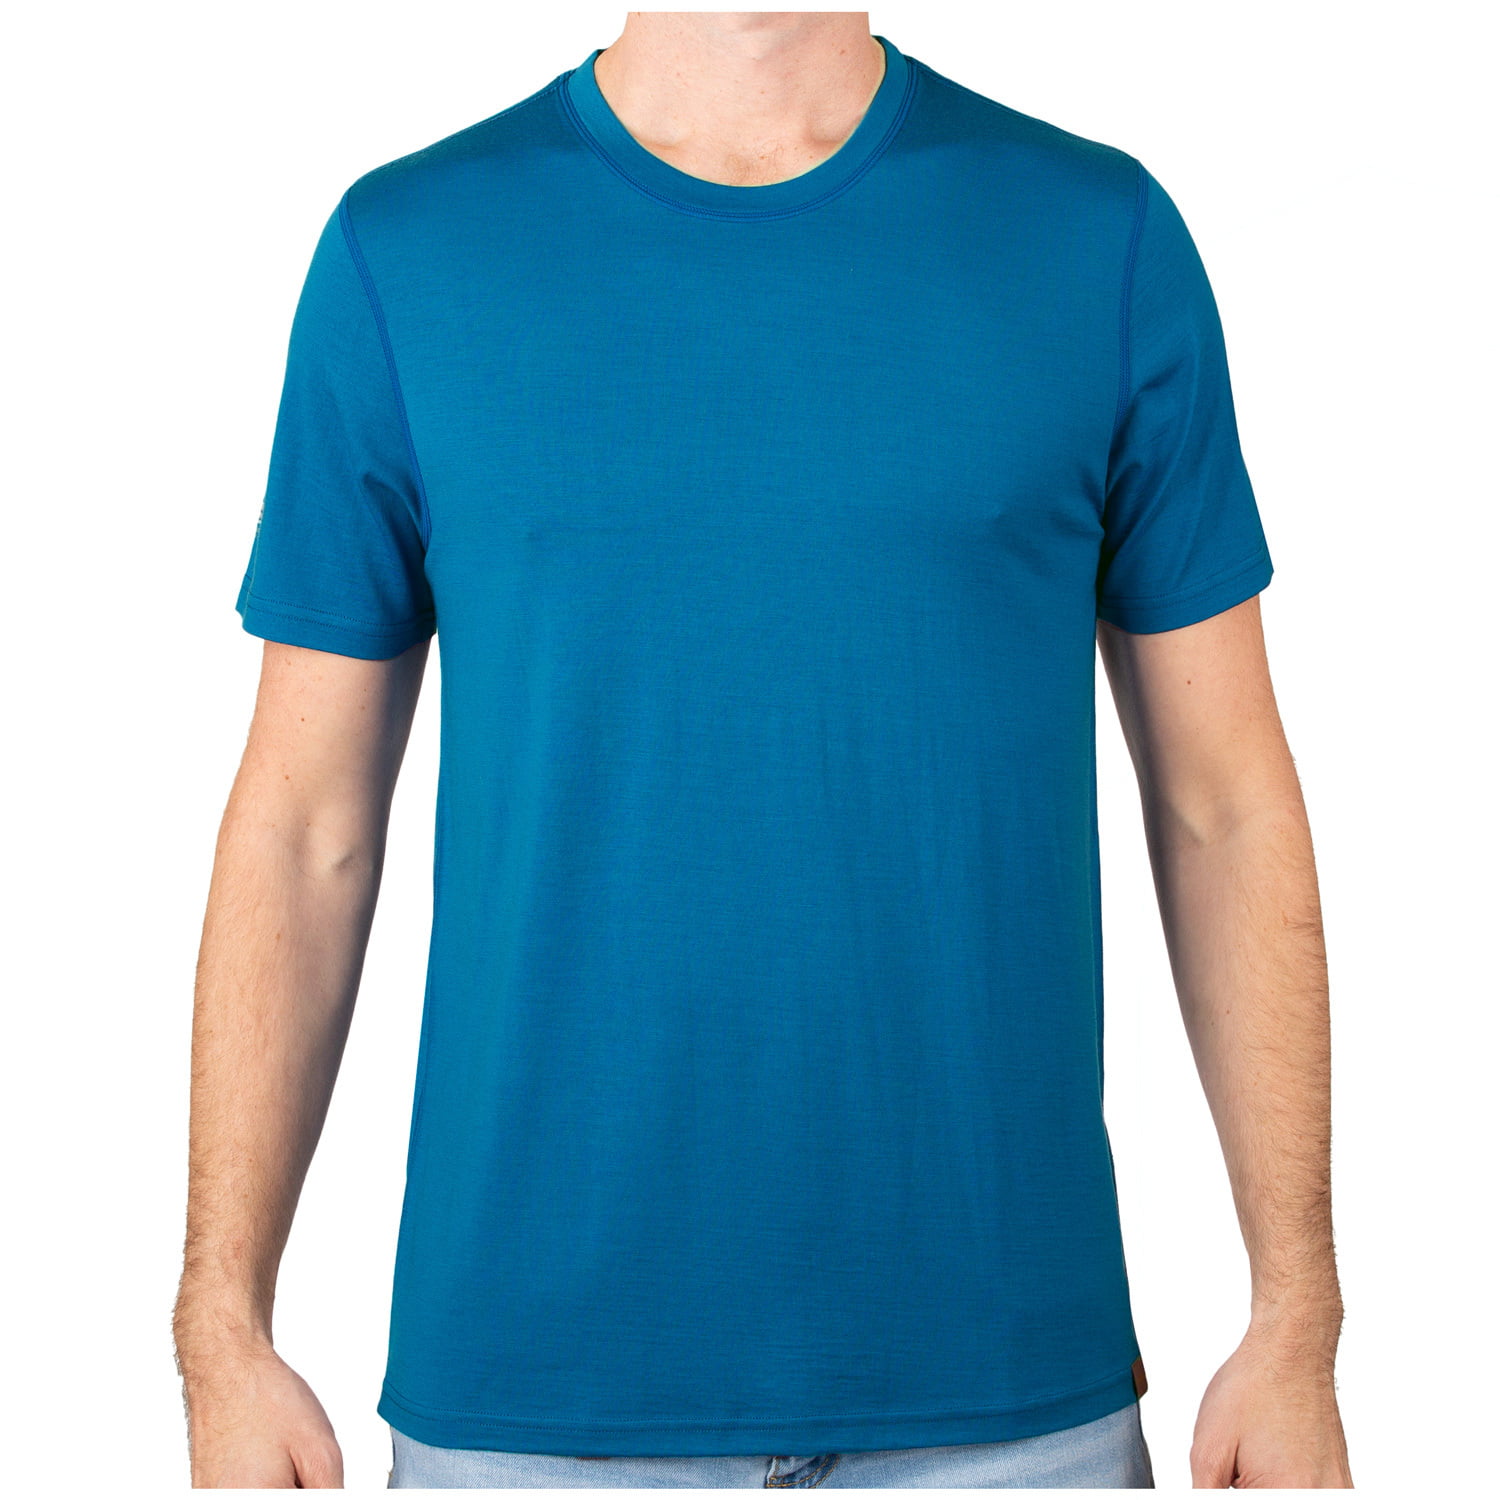 MERIWOOL Men’s Merino Wool Short Sleeve T Shirt Lightweight Base Layer ...